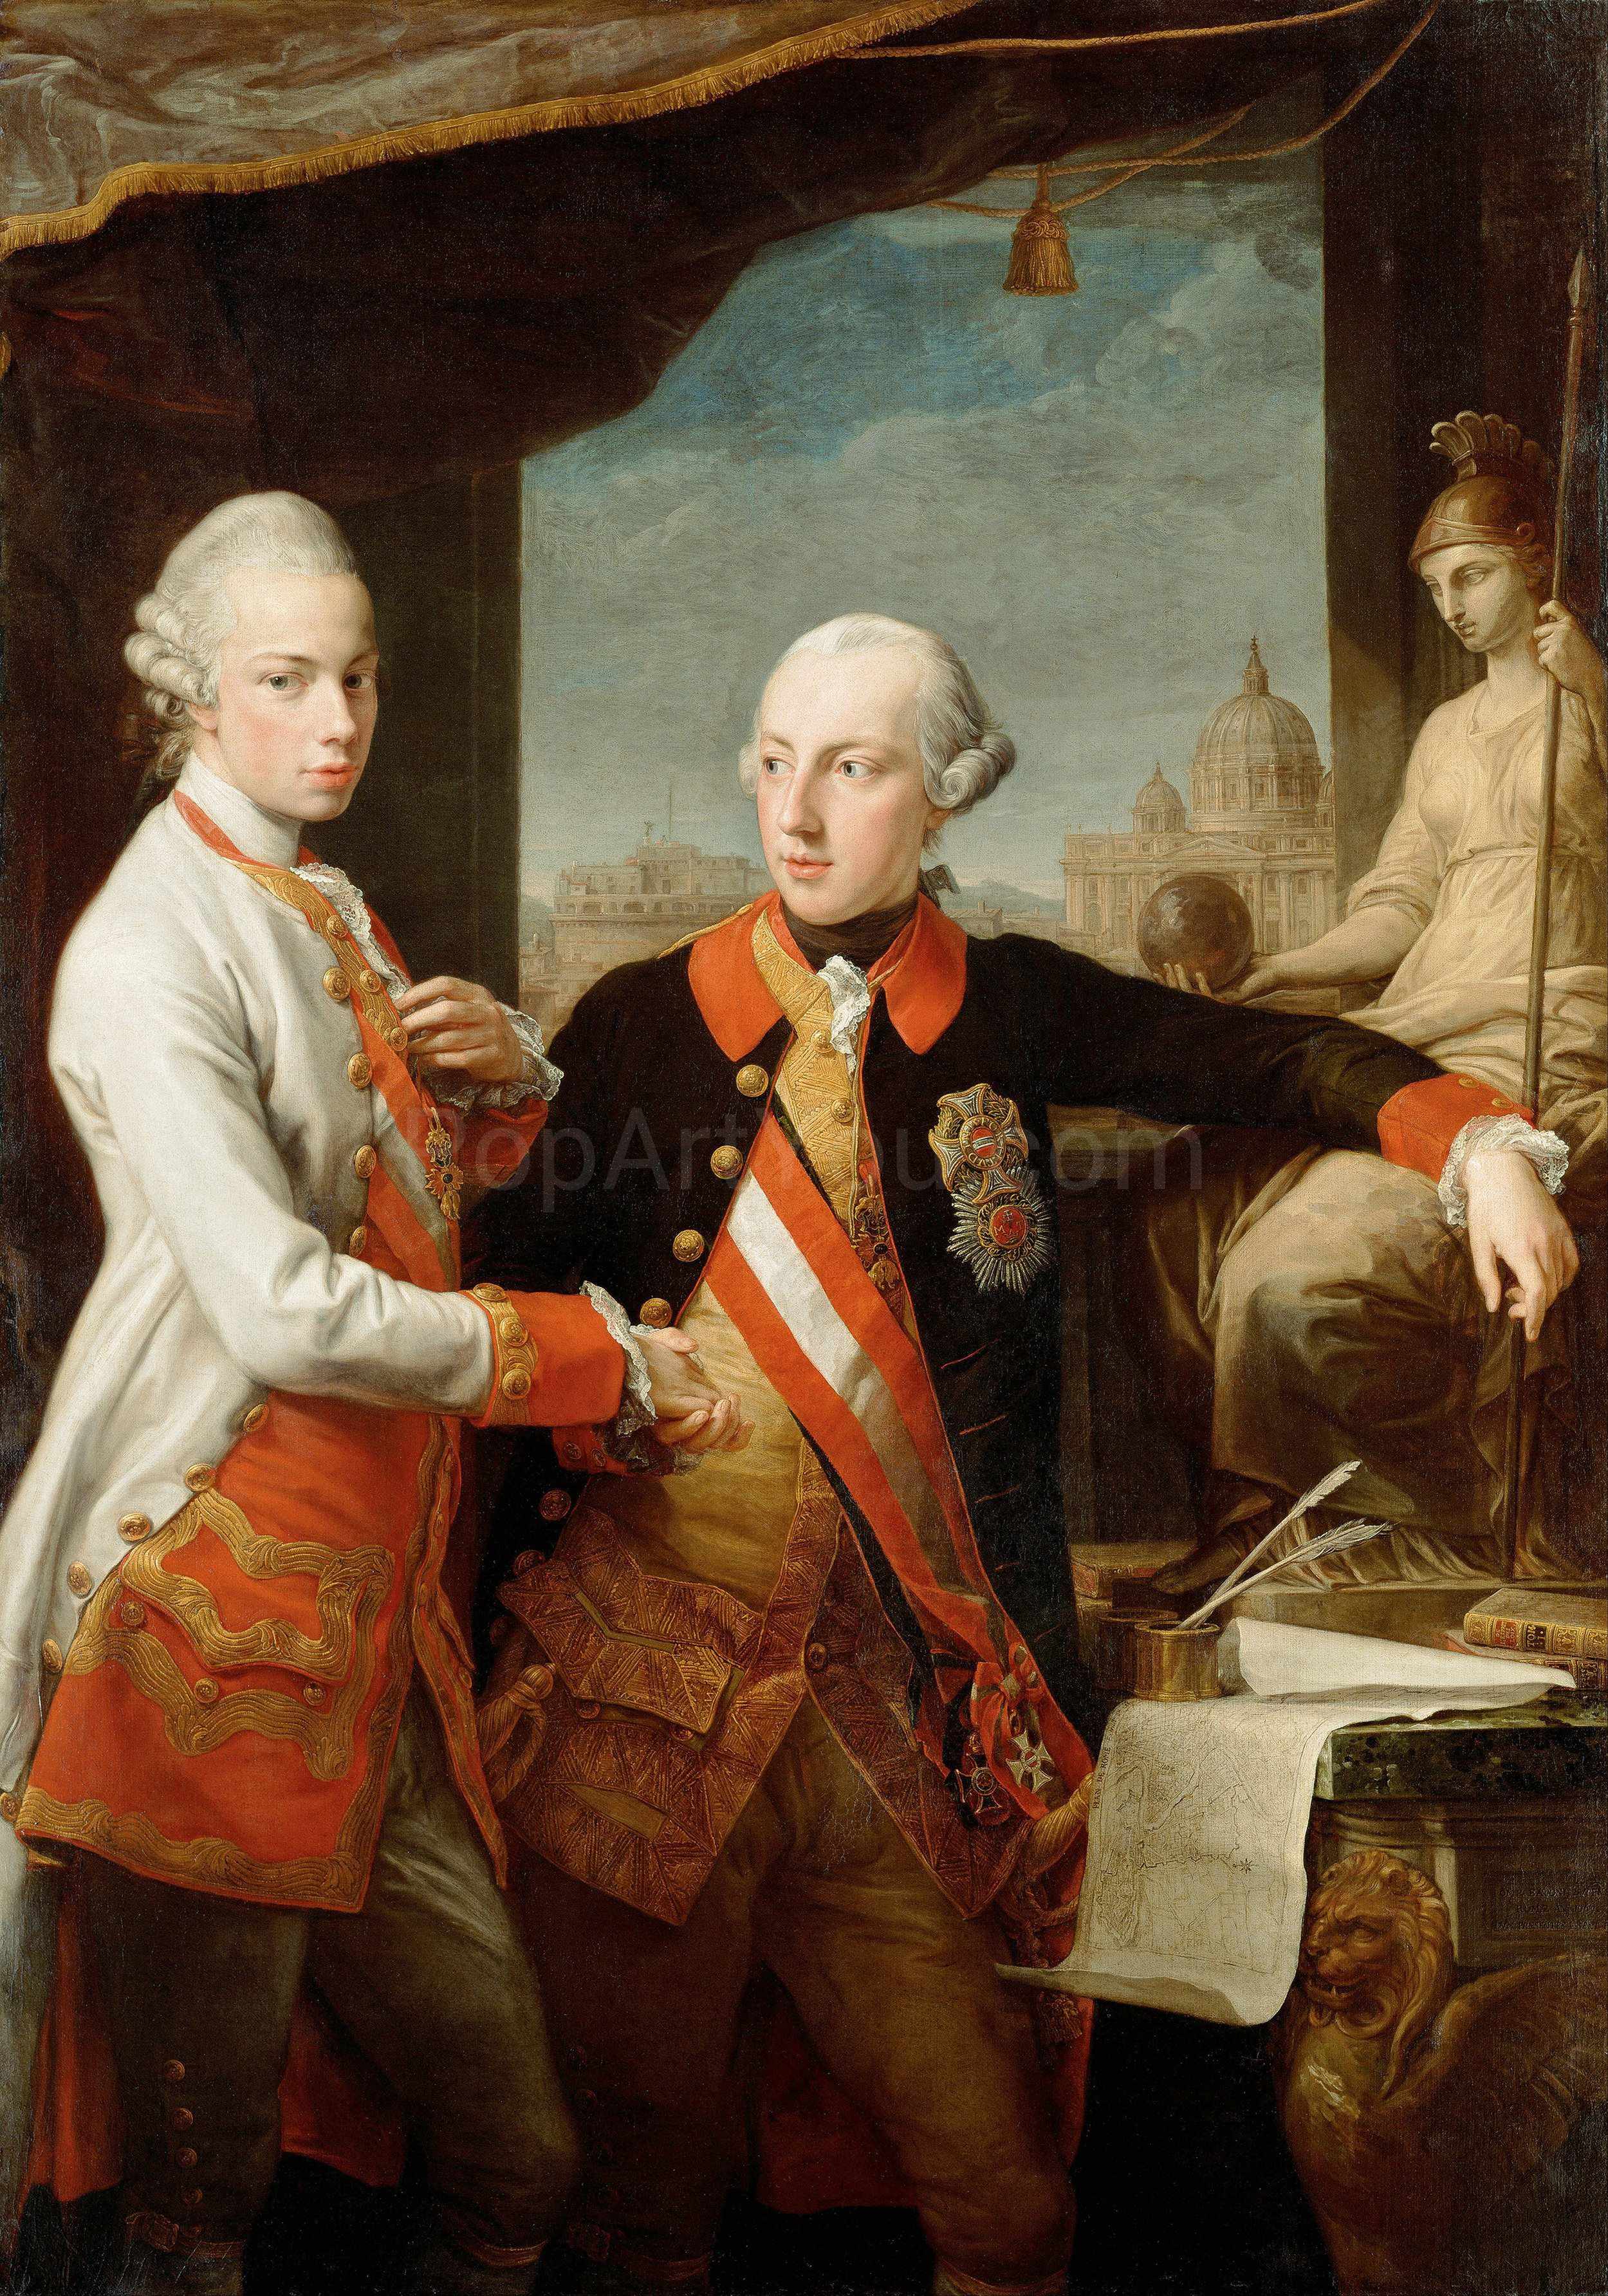 Emperor Joseph II with Grand Duke of Tuscany group of men portrait